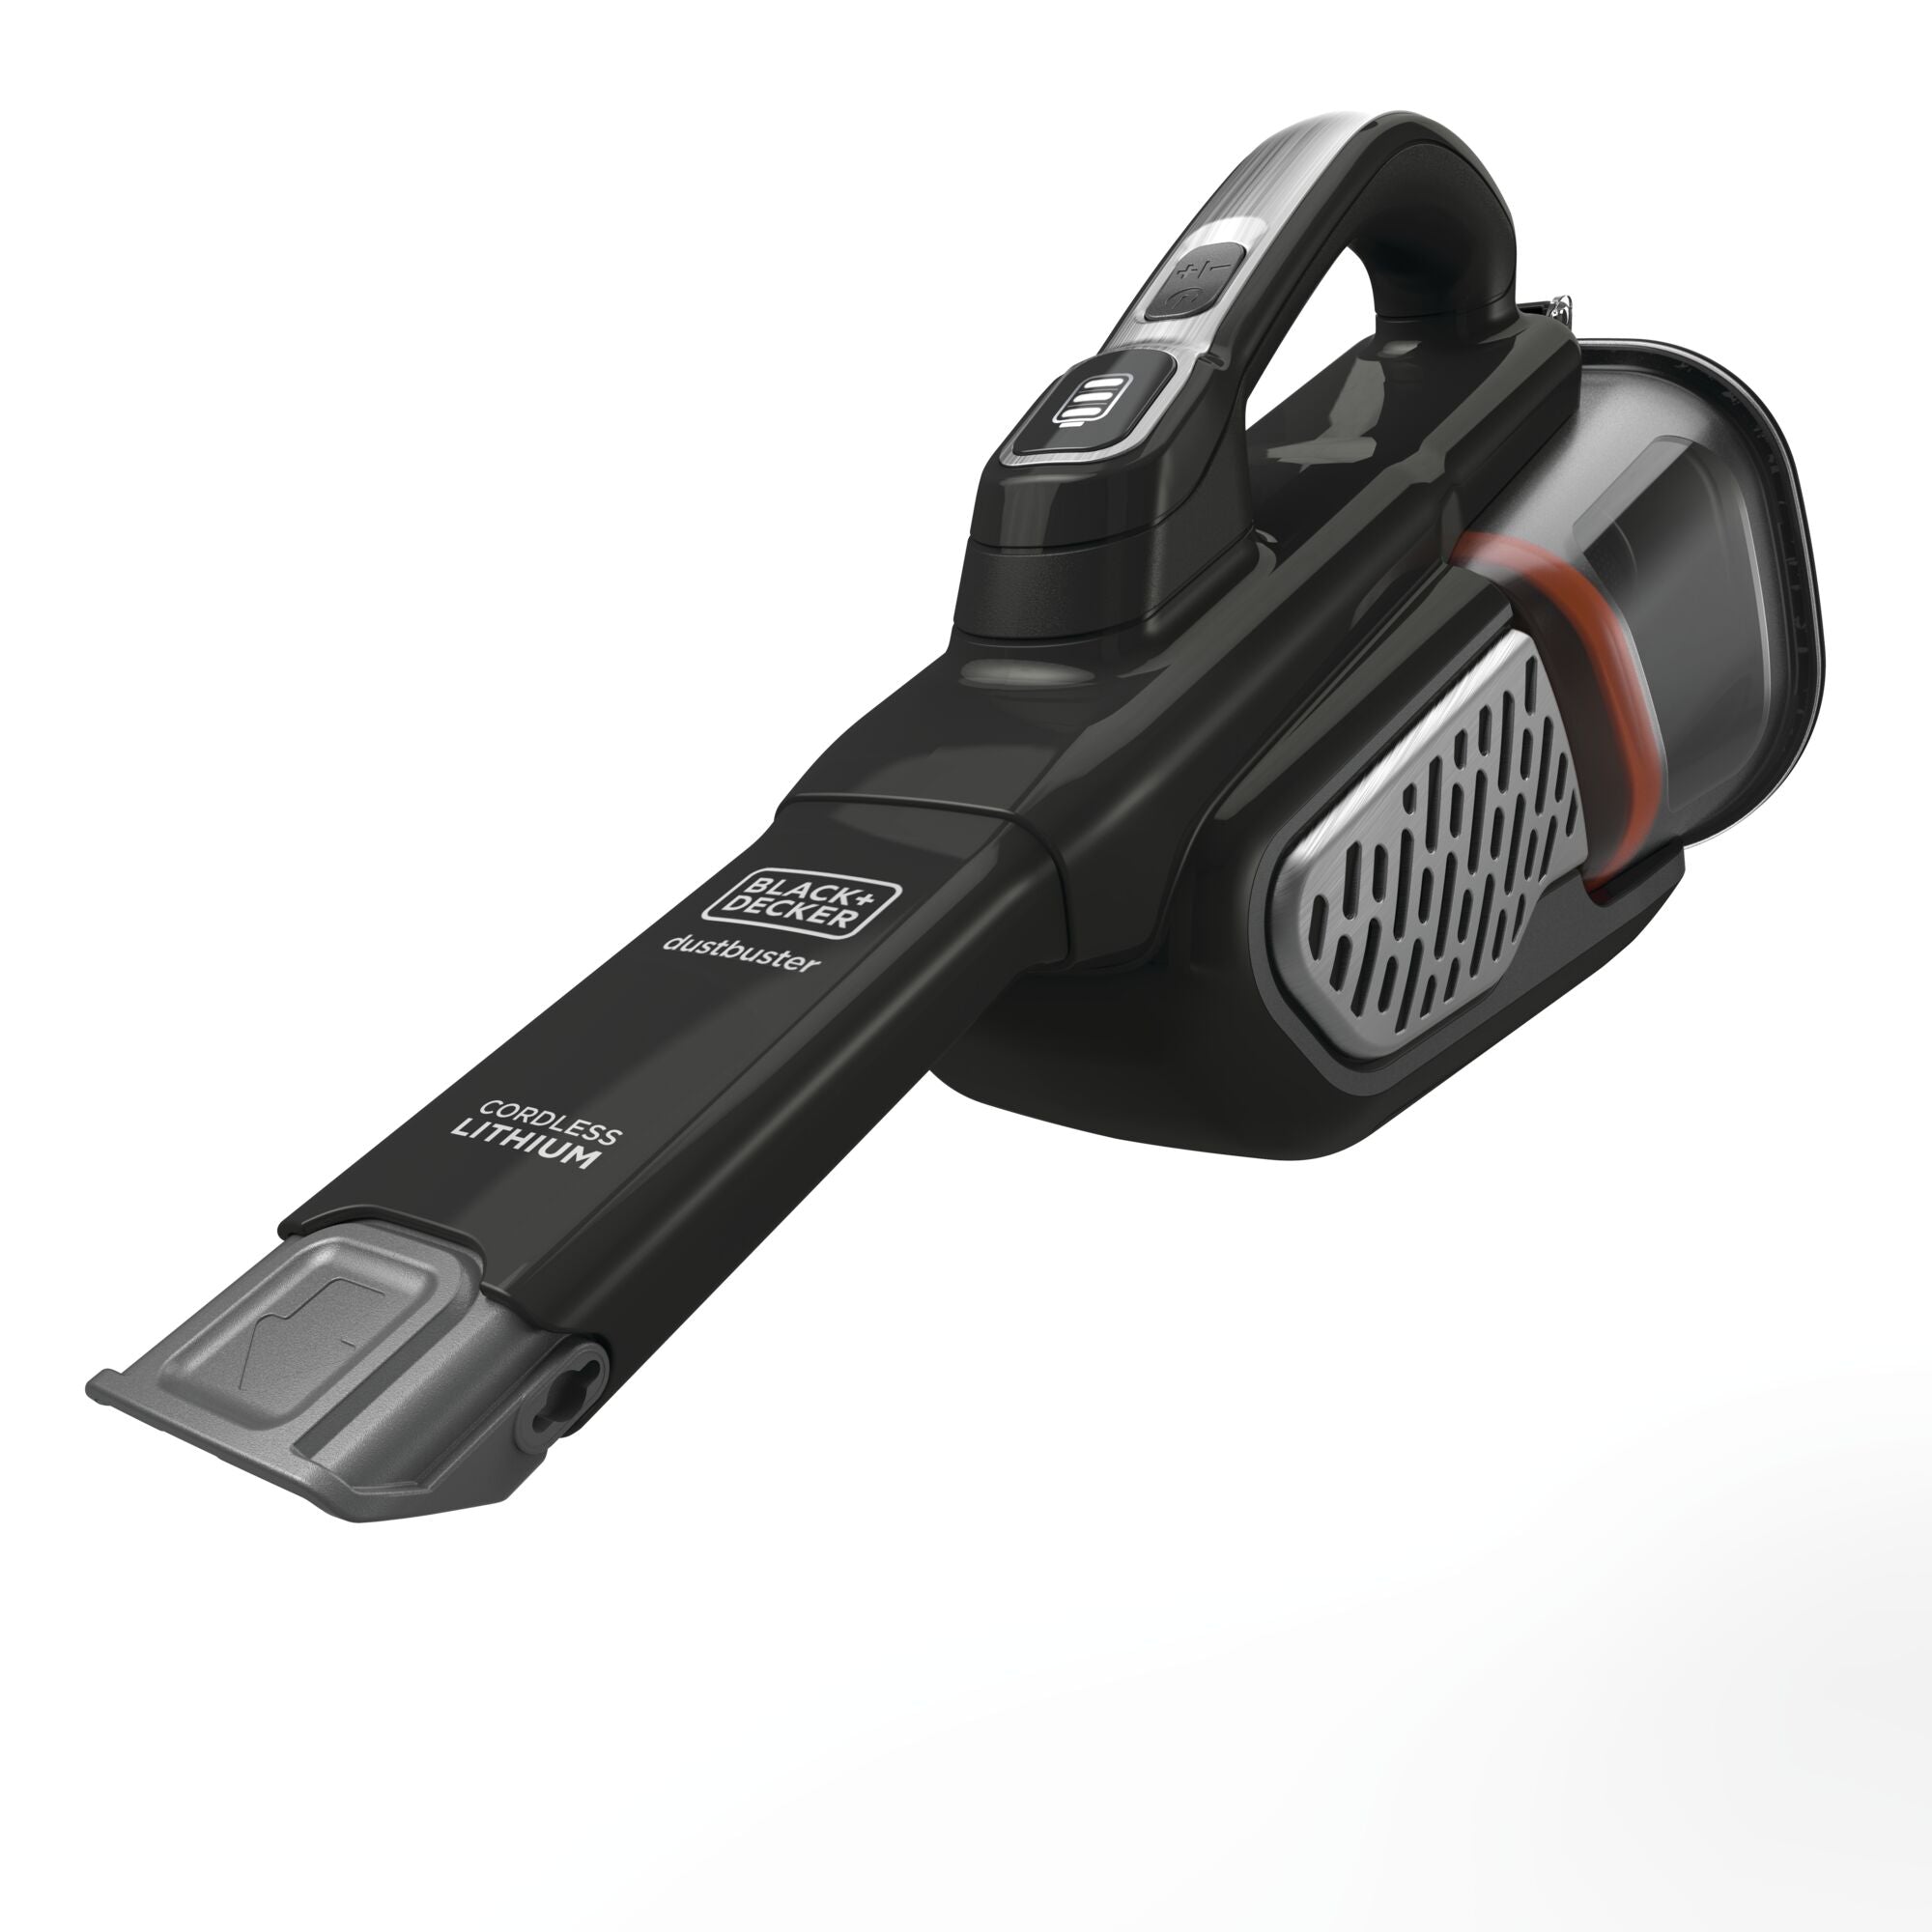 BLACK+DECKER dustbuster Cordless Handheld Vacuum Review 